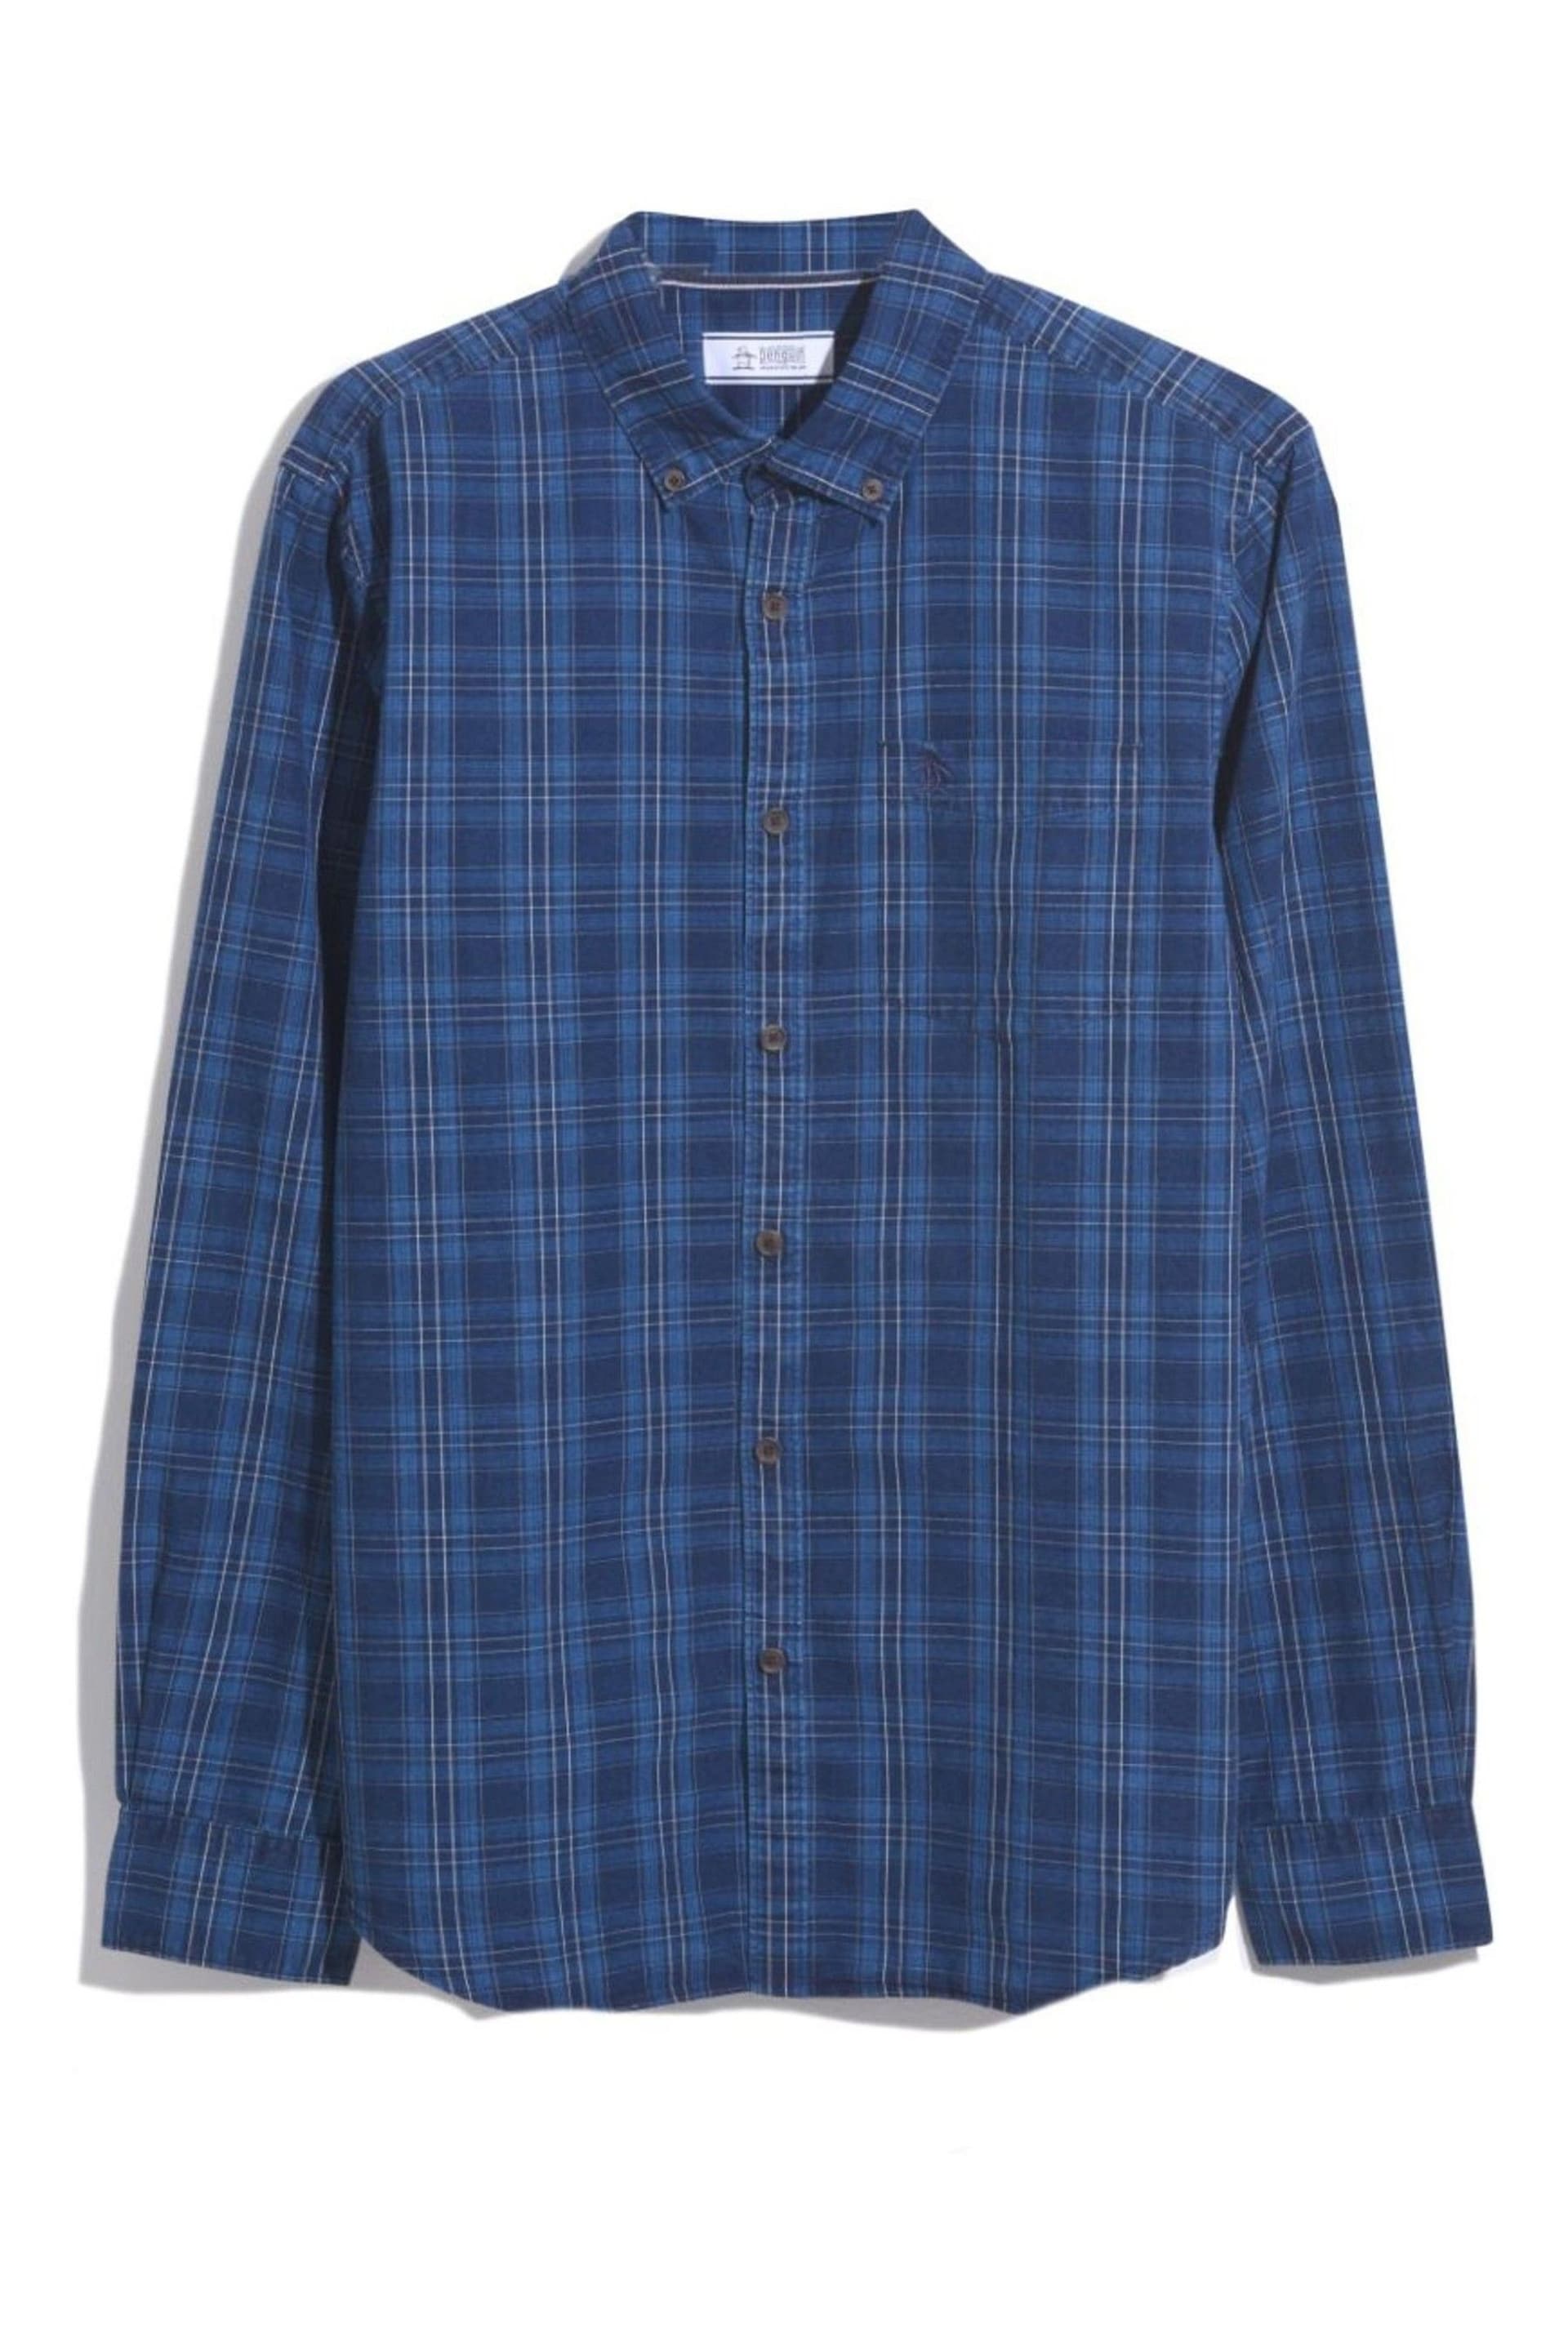 Original Penguin Indigo Blue Plaid Cotton Long Sleeve Shirt - Image 6 of 6